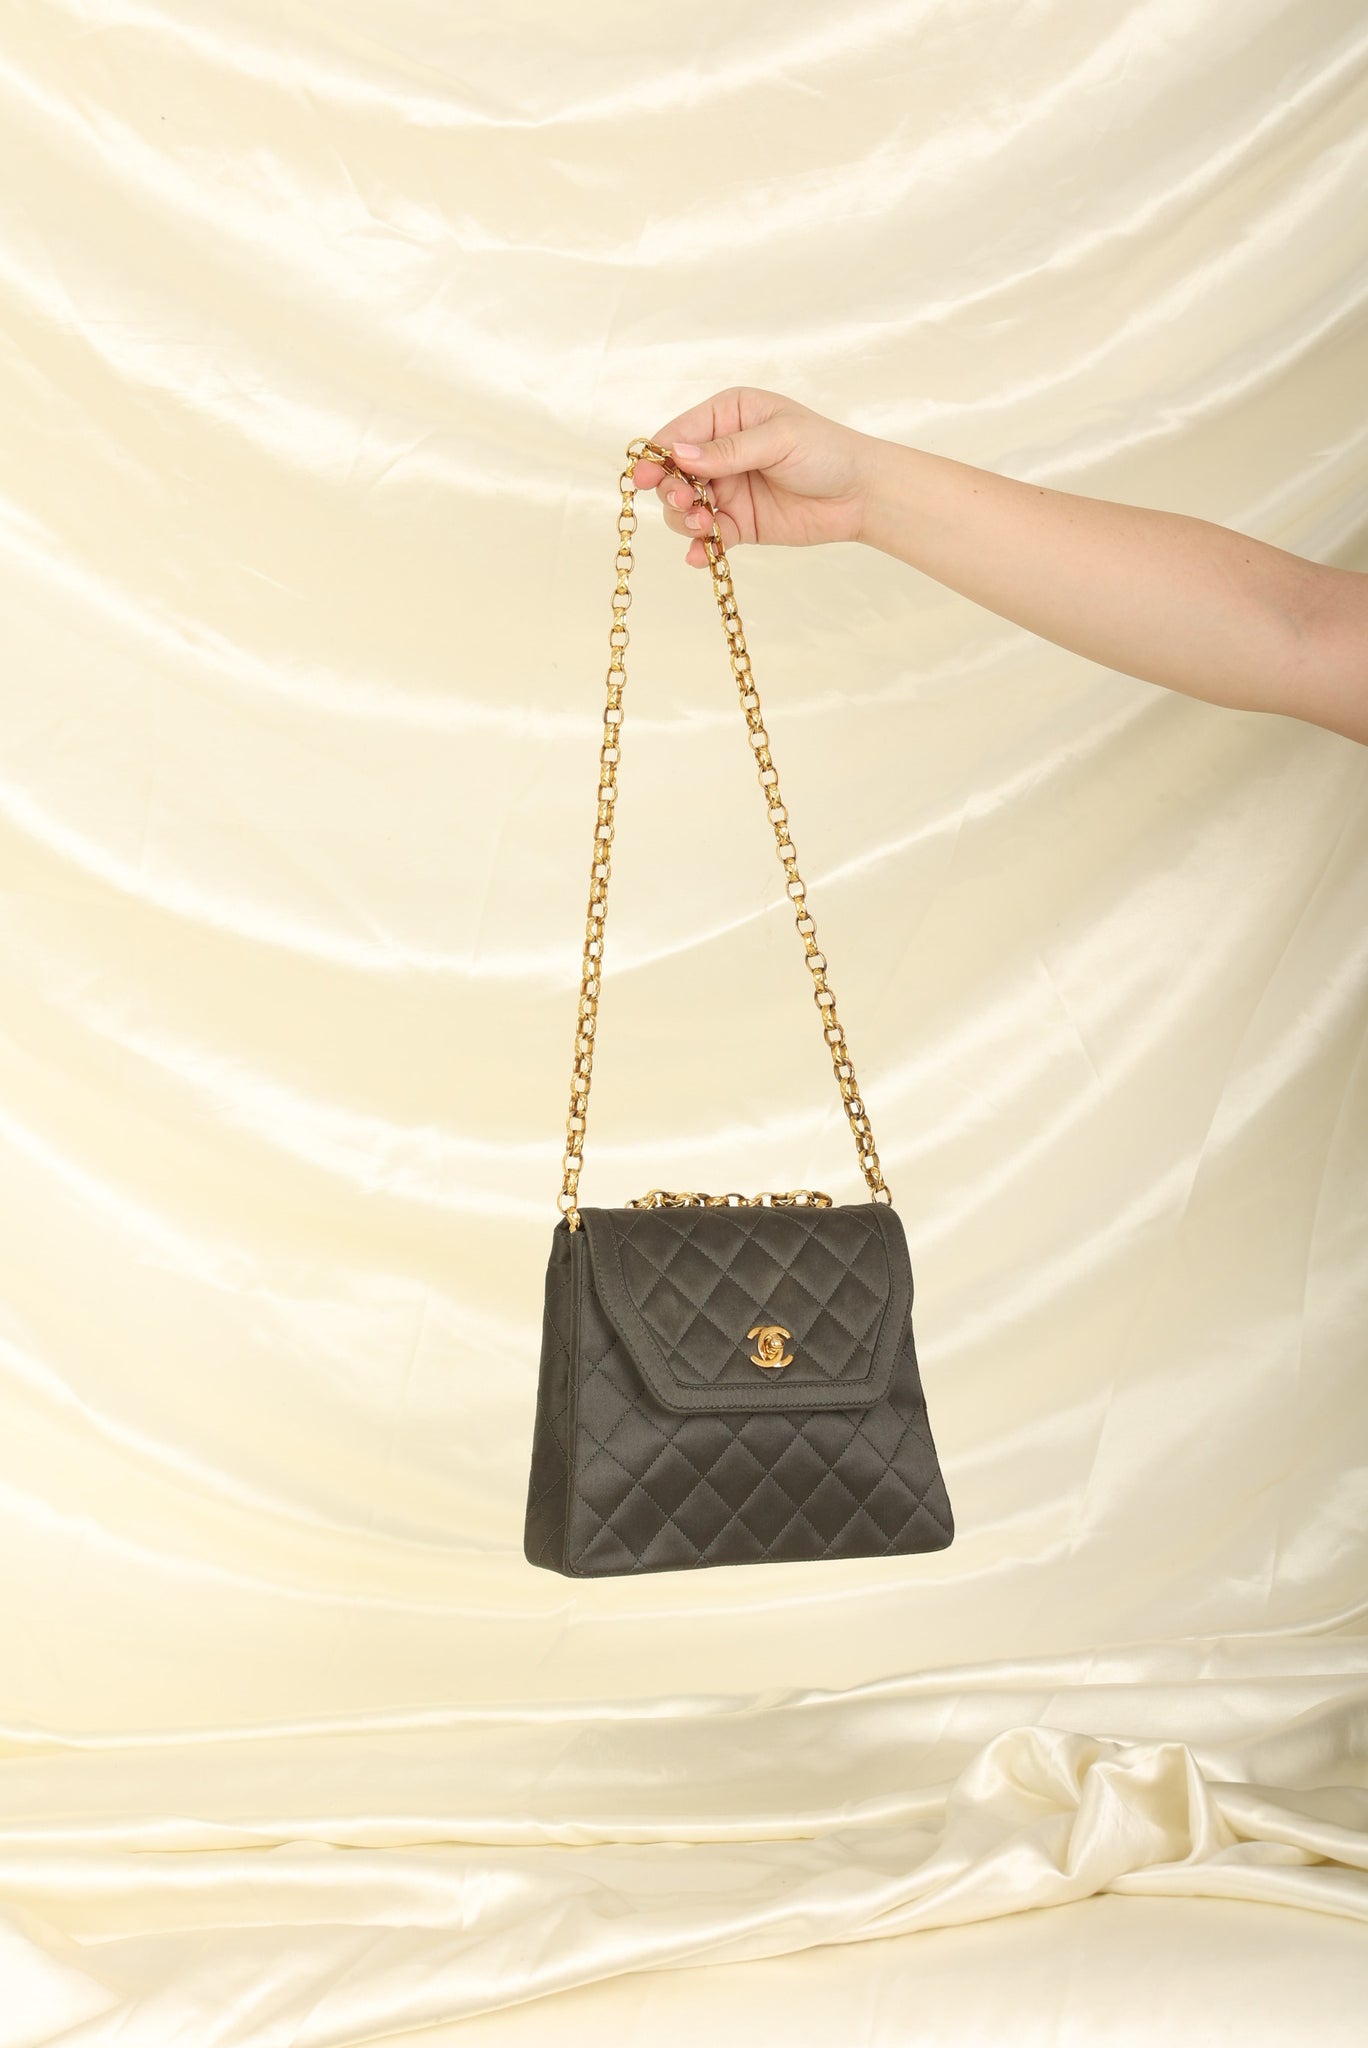 Chanel Gold Mini Chain Crossbody Bag